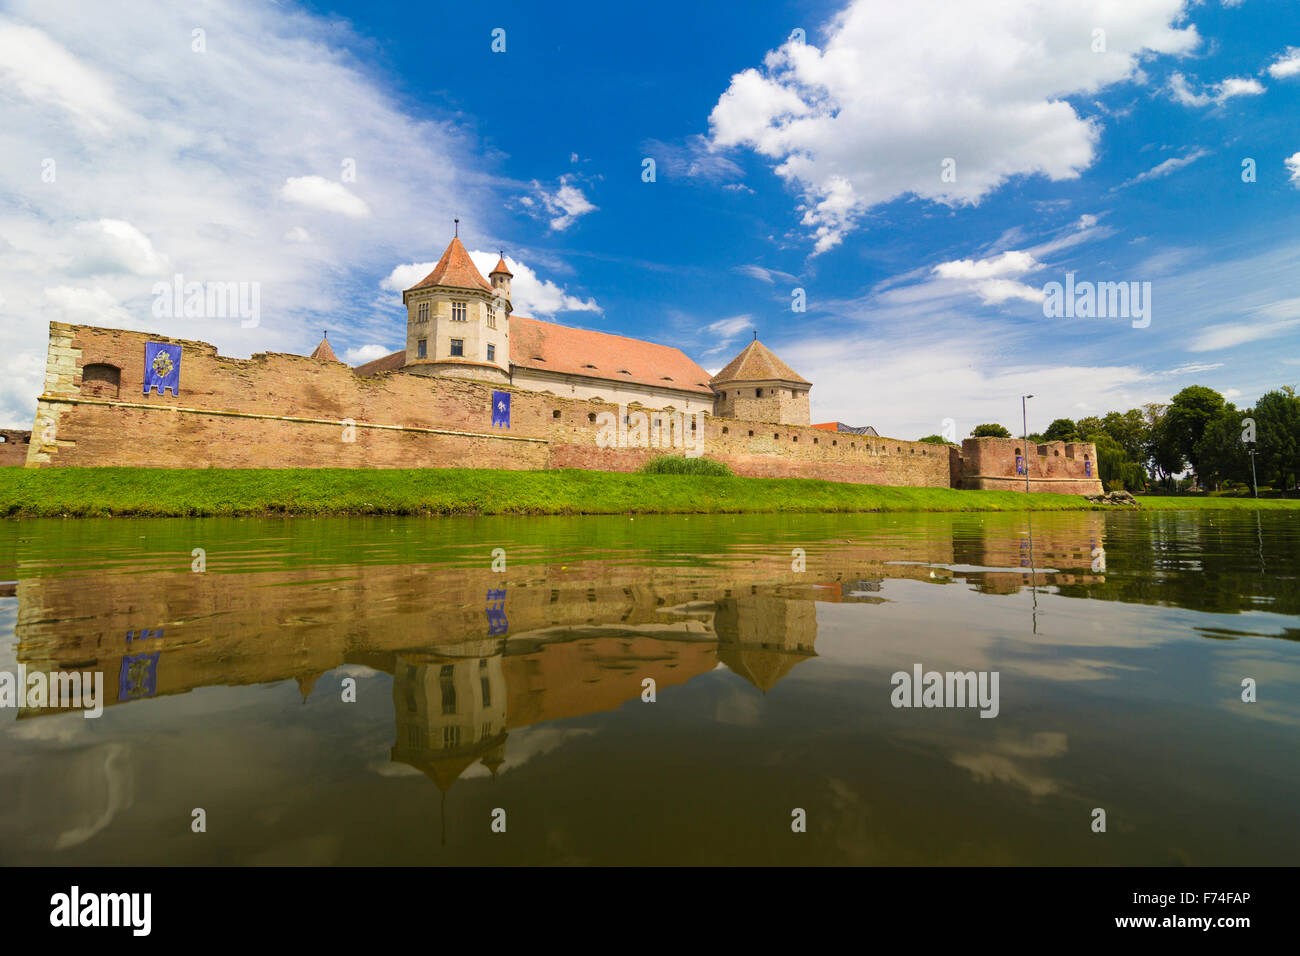 Old castle mirrored by surrounding moat, Transylvania, Romania Stock Photo